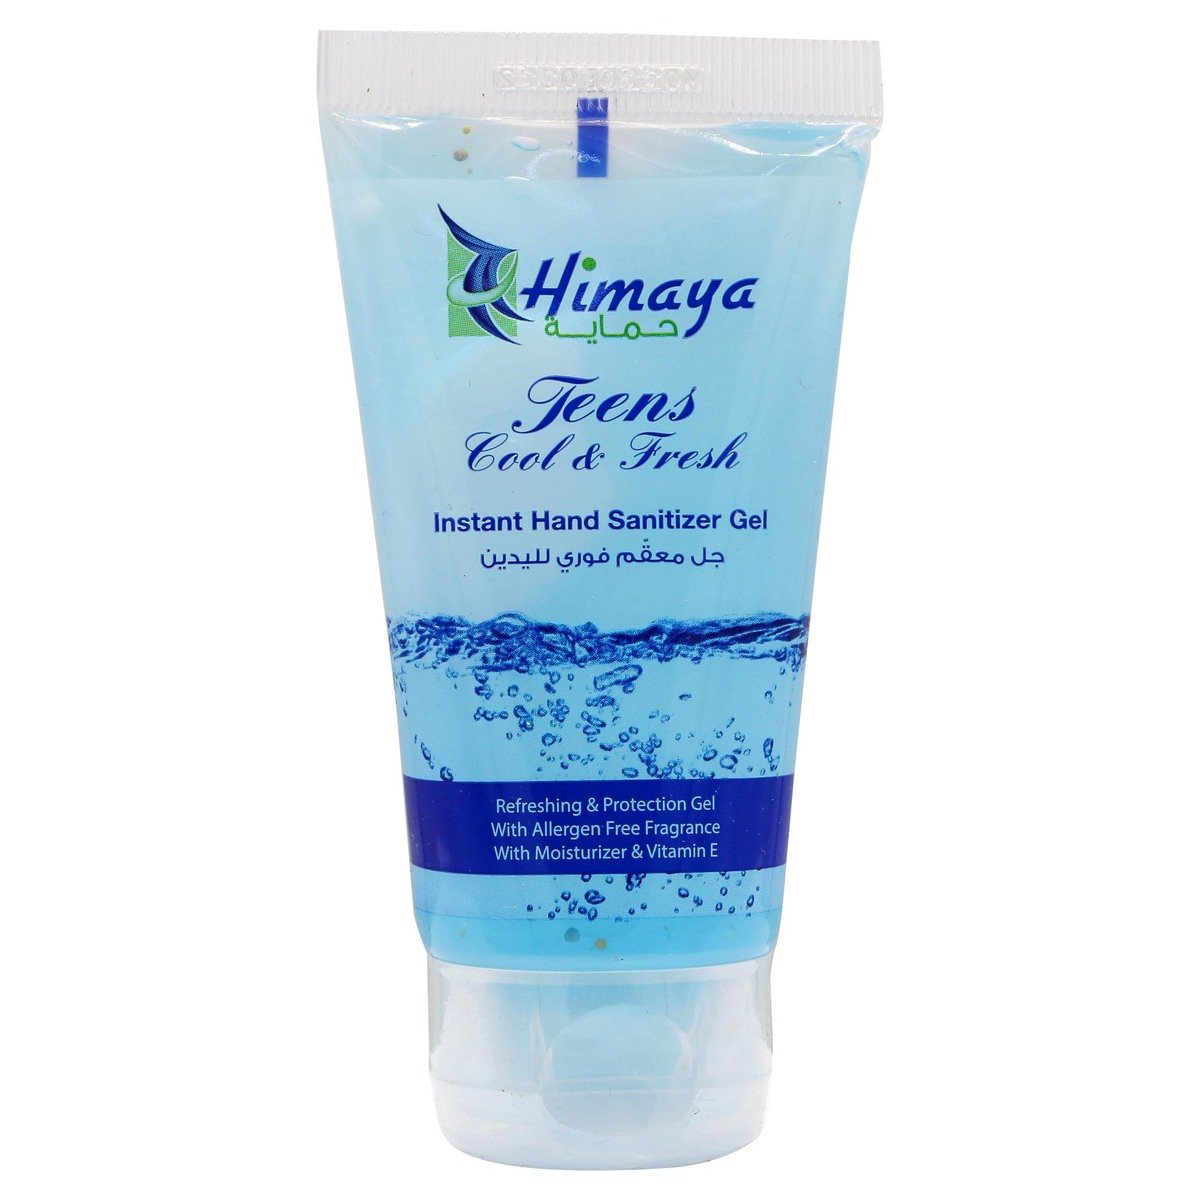 Himaya Instant Hand Sanitizer Gel Teens Cool & Fresh 50ml